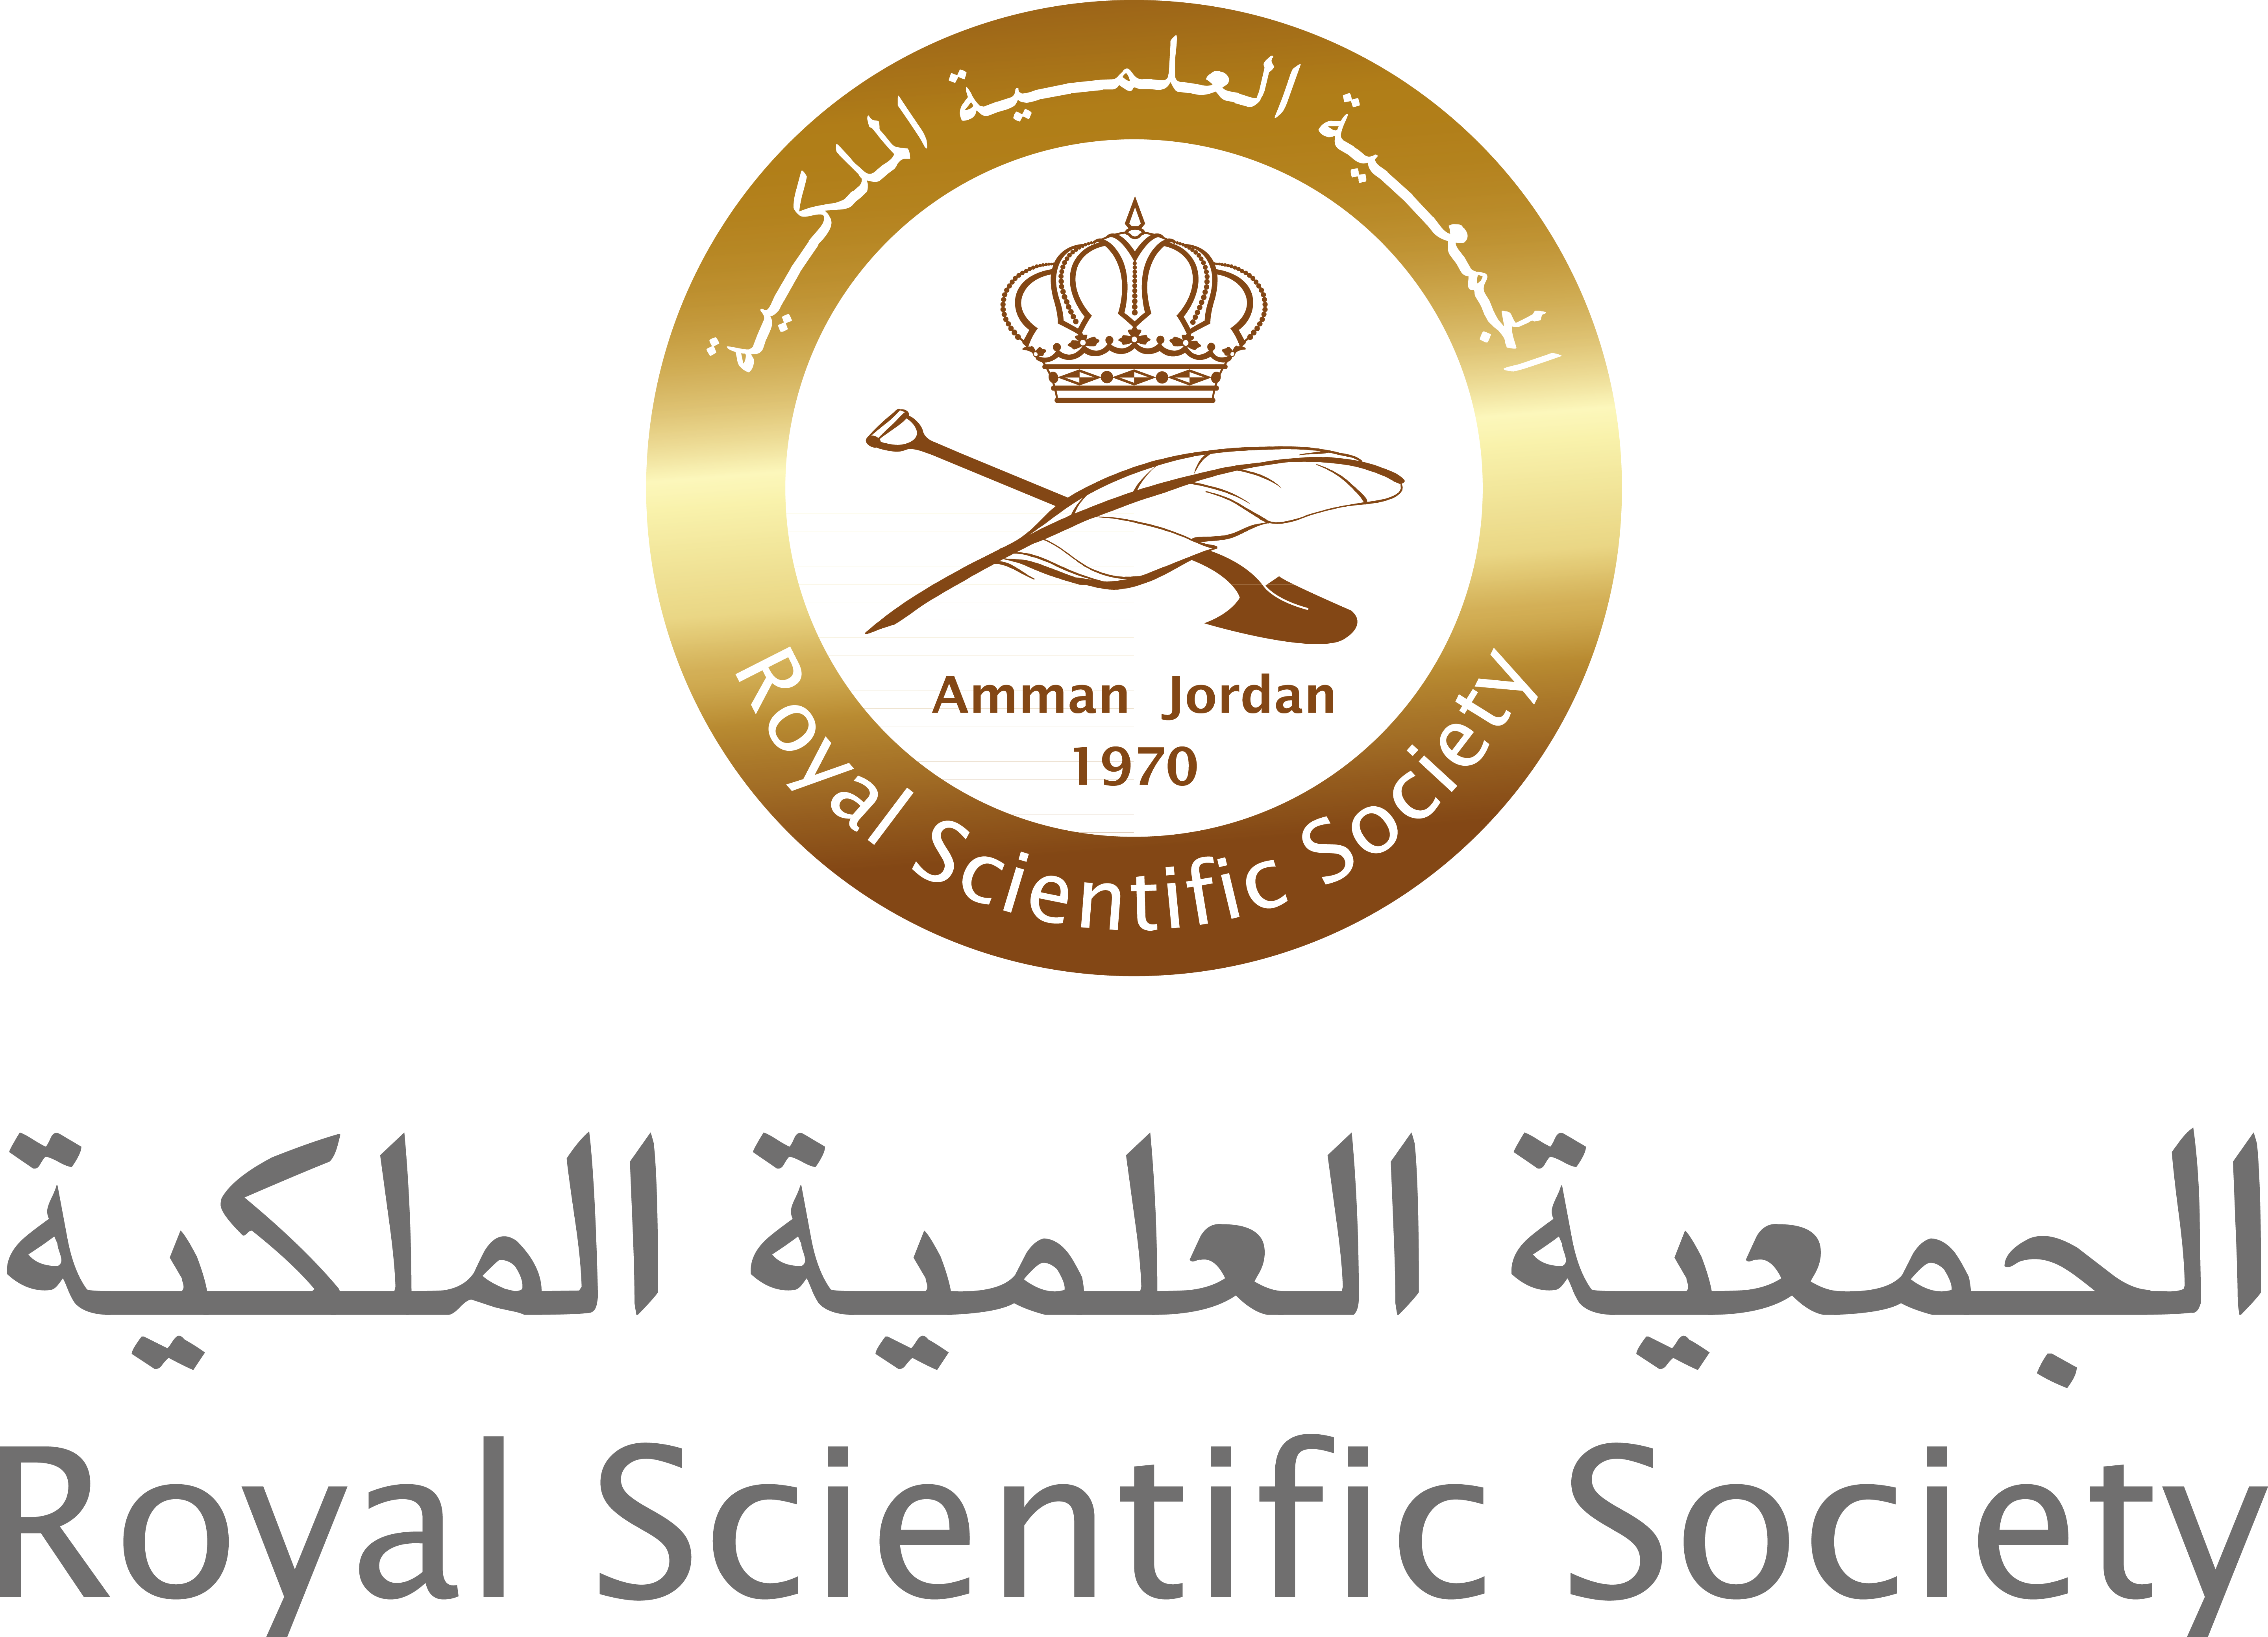 Scientific society. Логотип компании Иордании. Эмблема Scientific Society Самарканд.